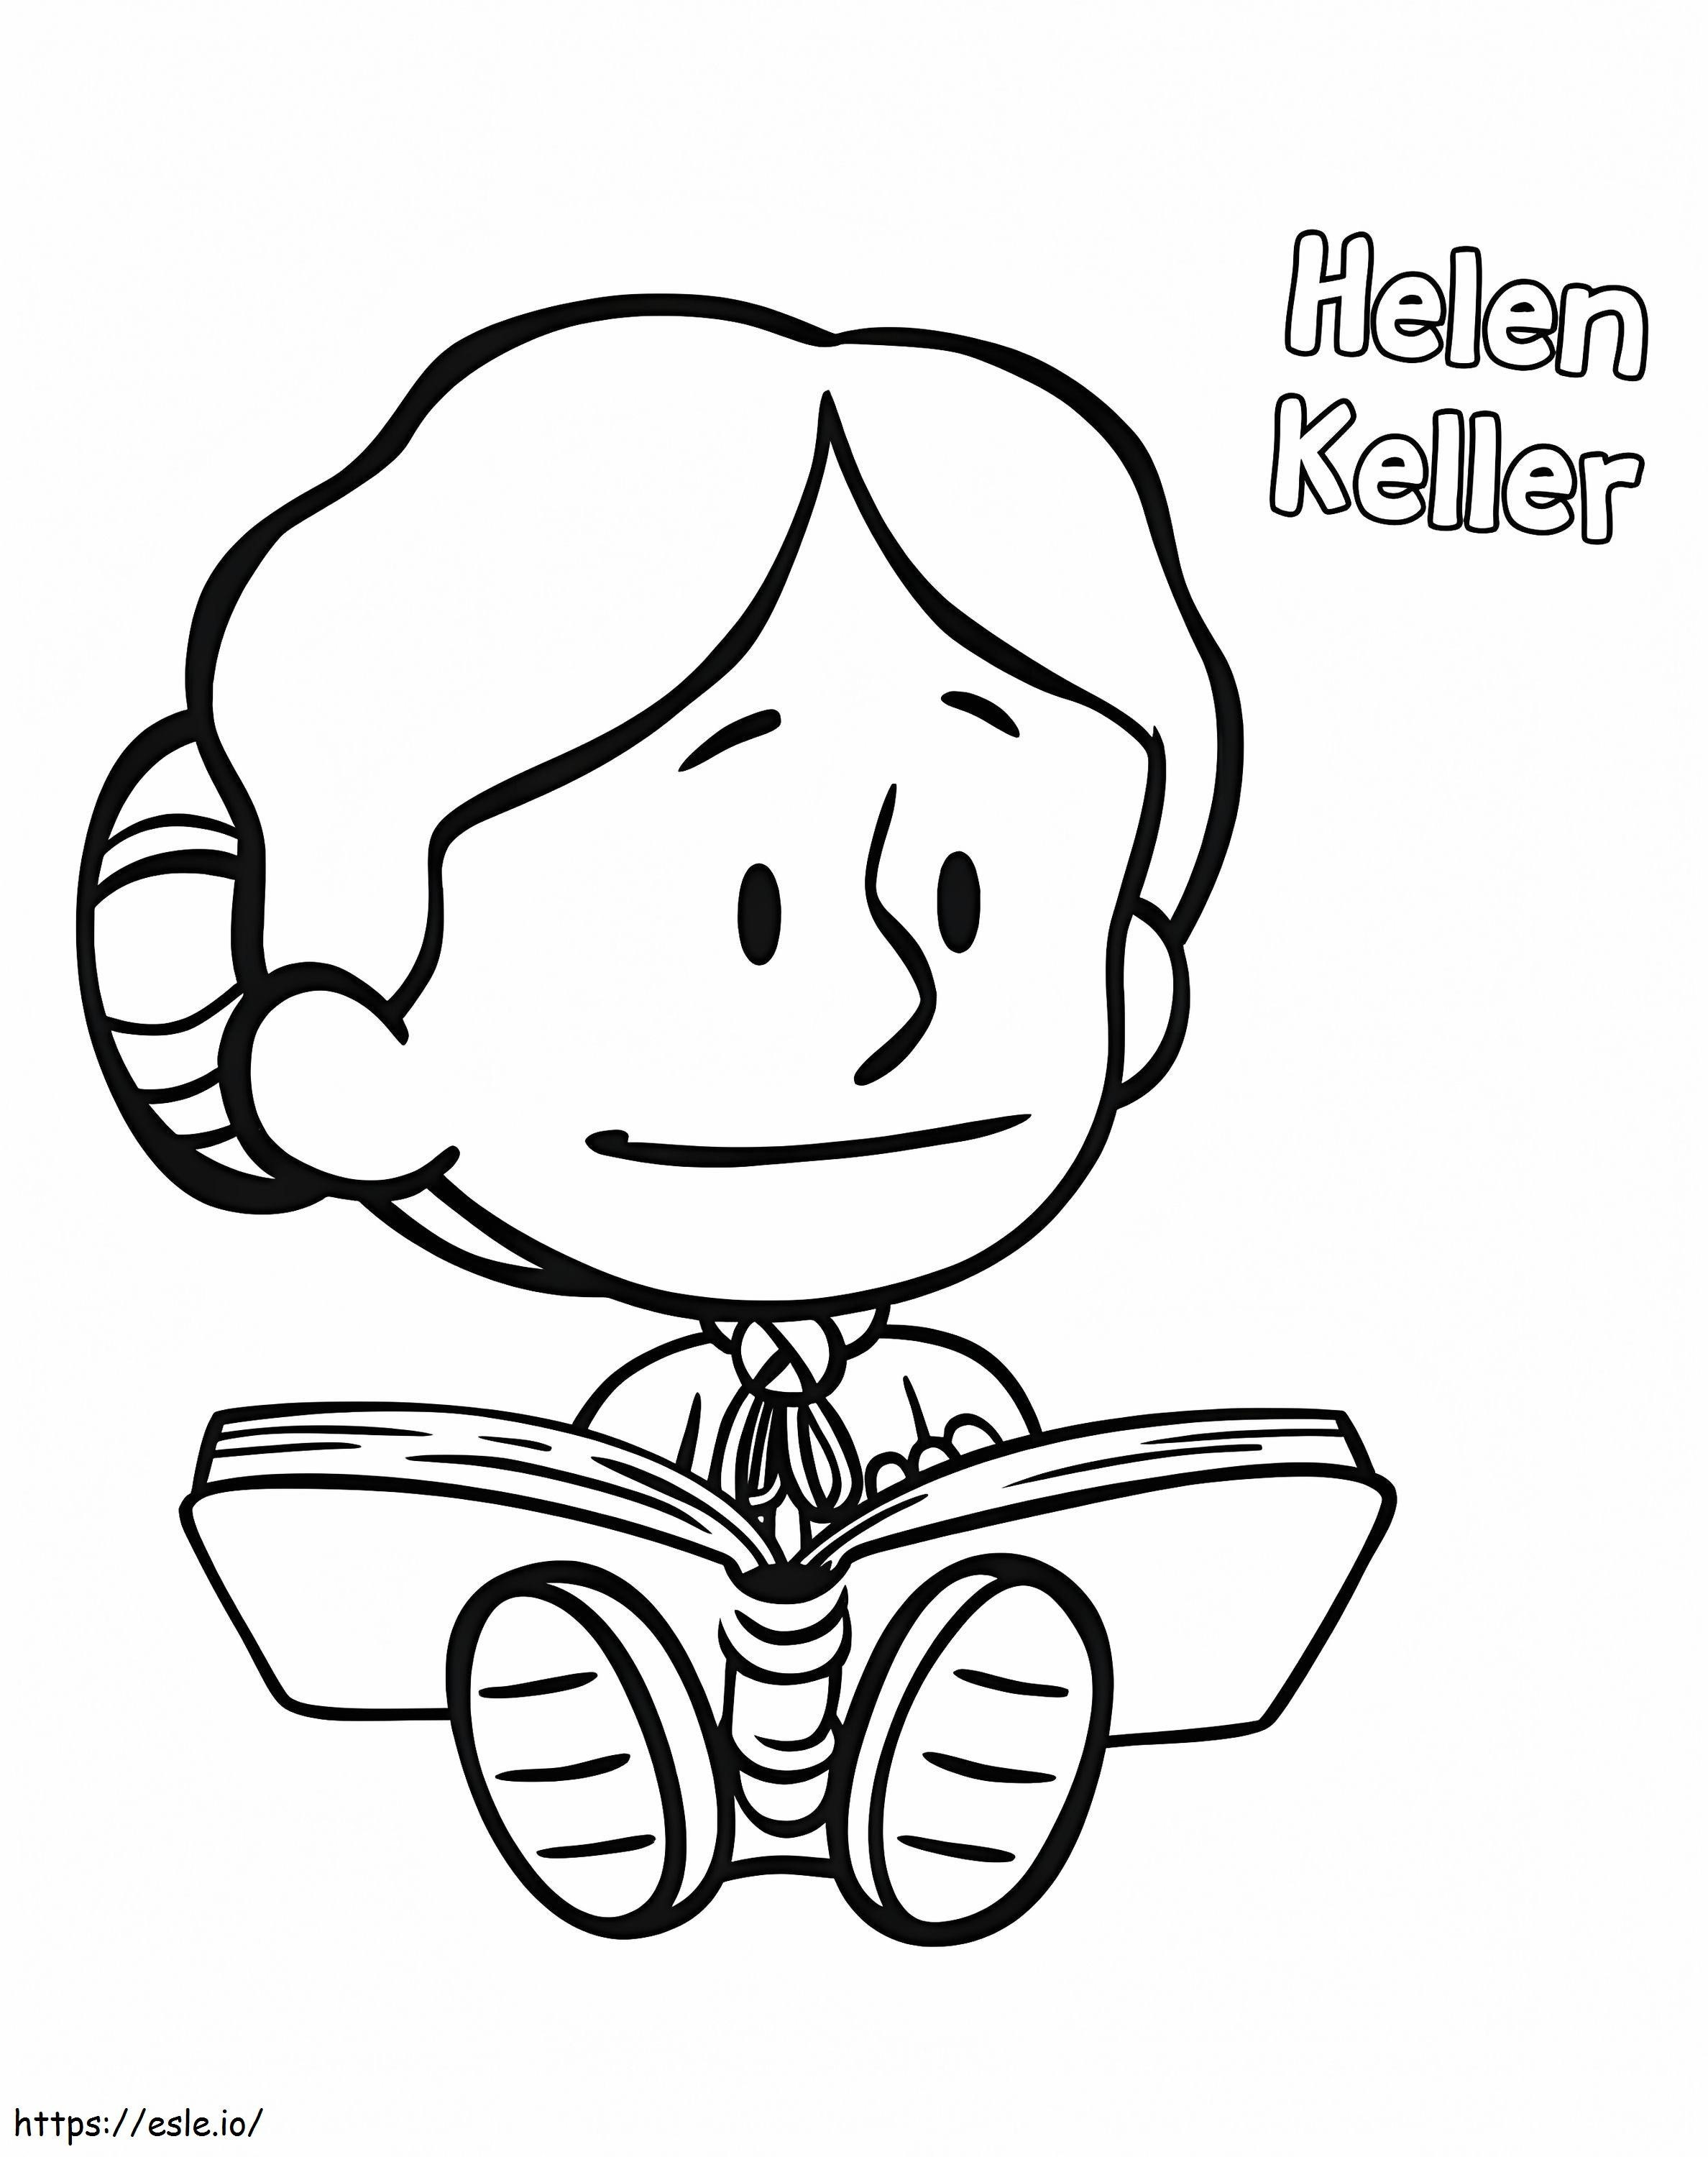 Chibi Helen Keller kolorowanka